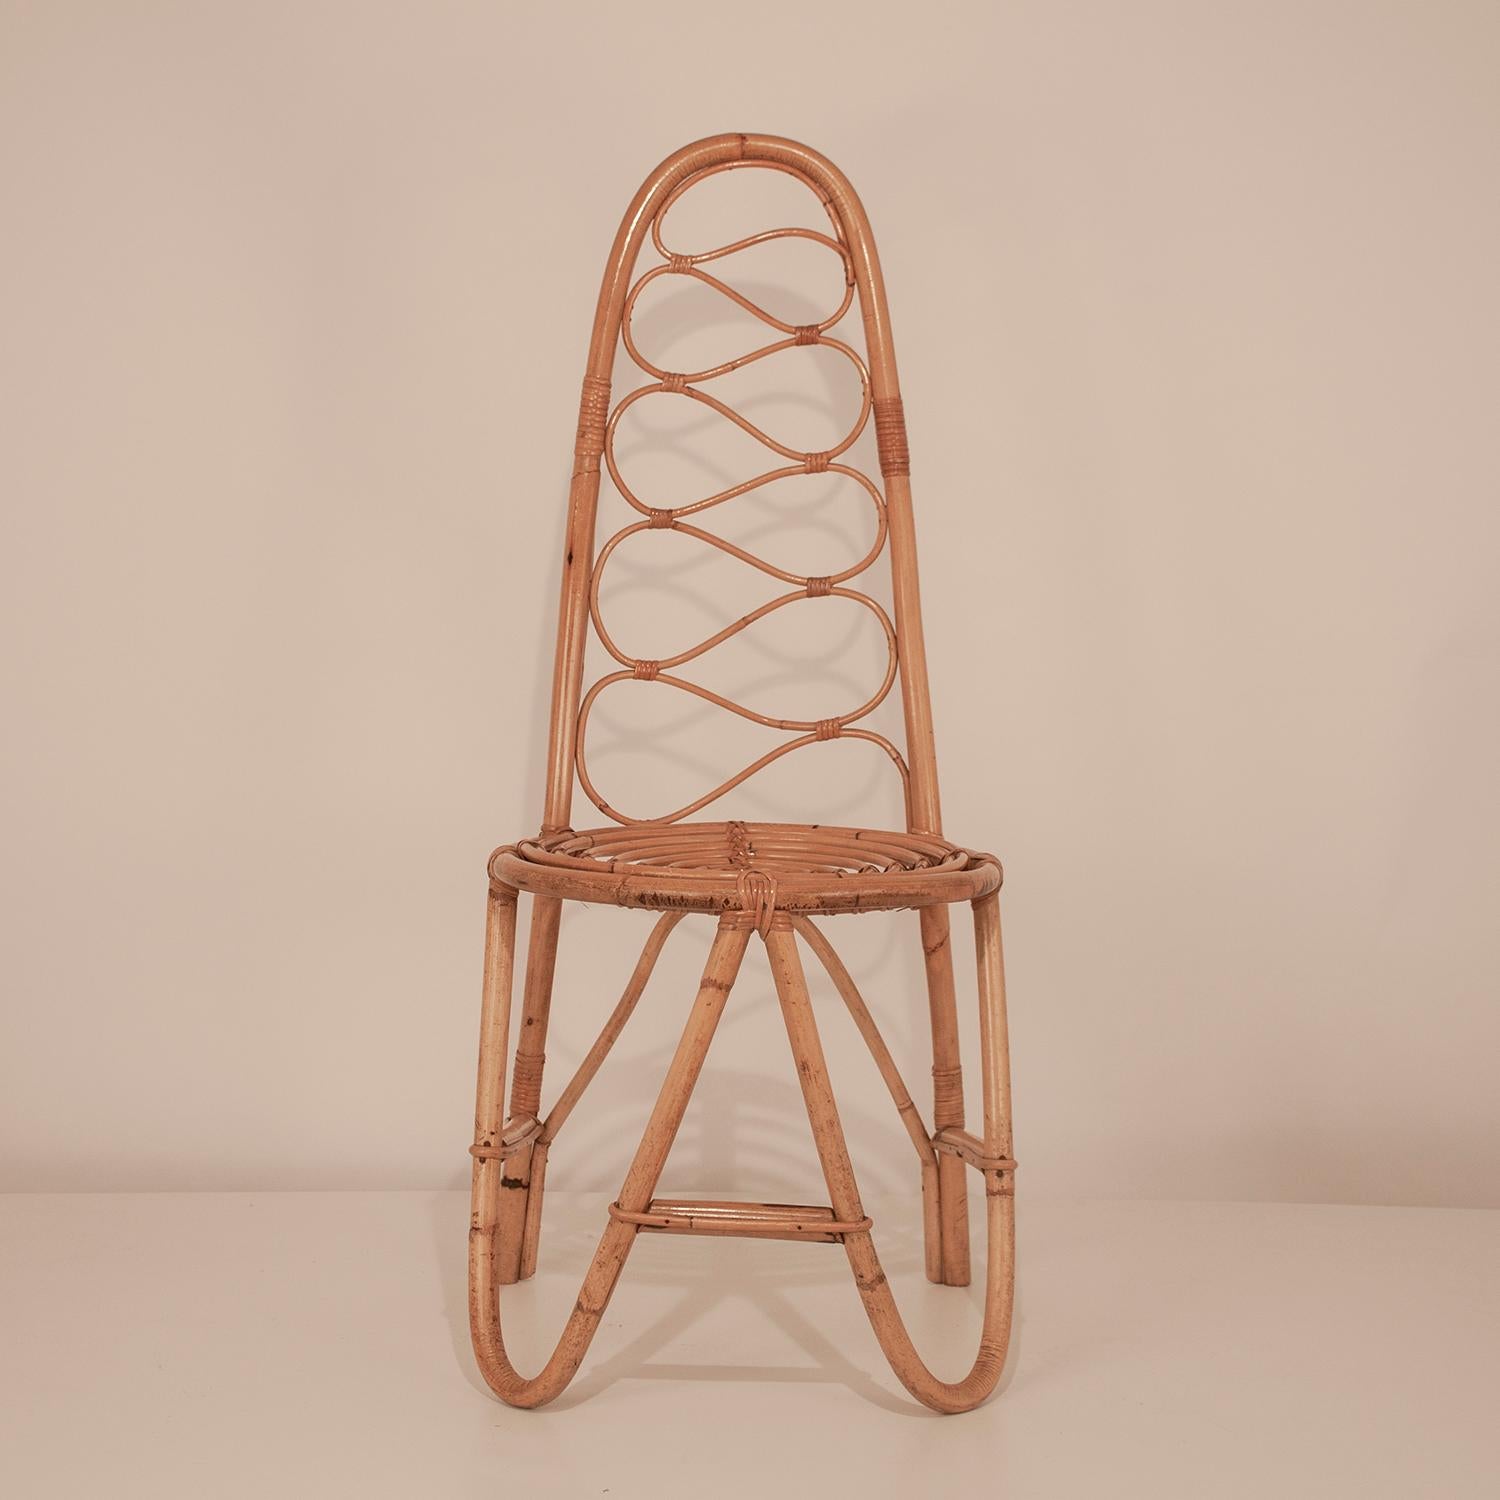 Bamboo chair, Spain, 1960s.